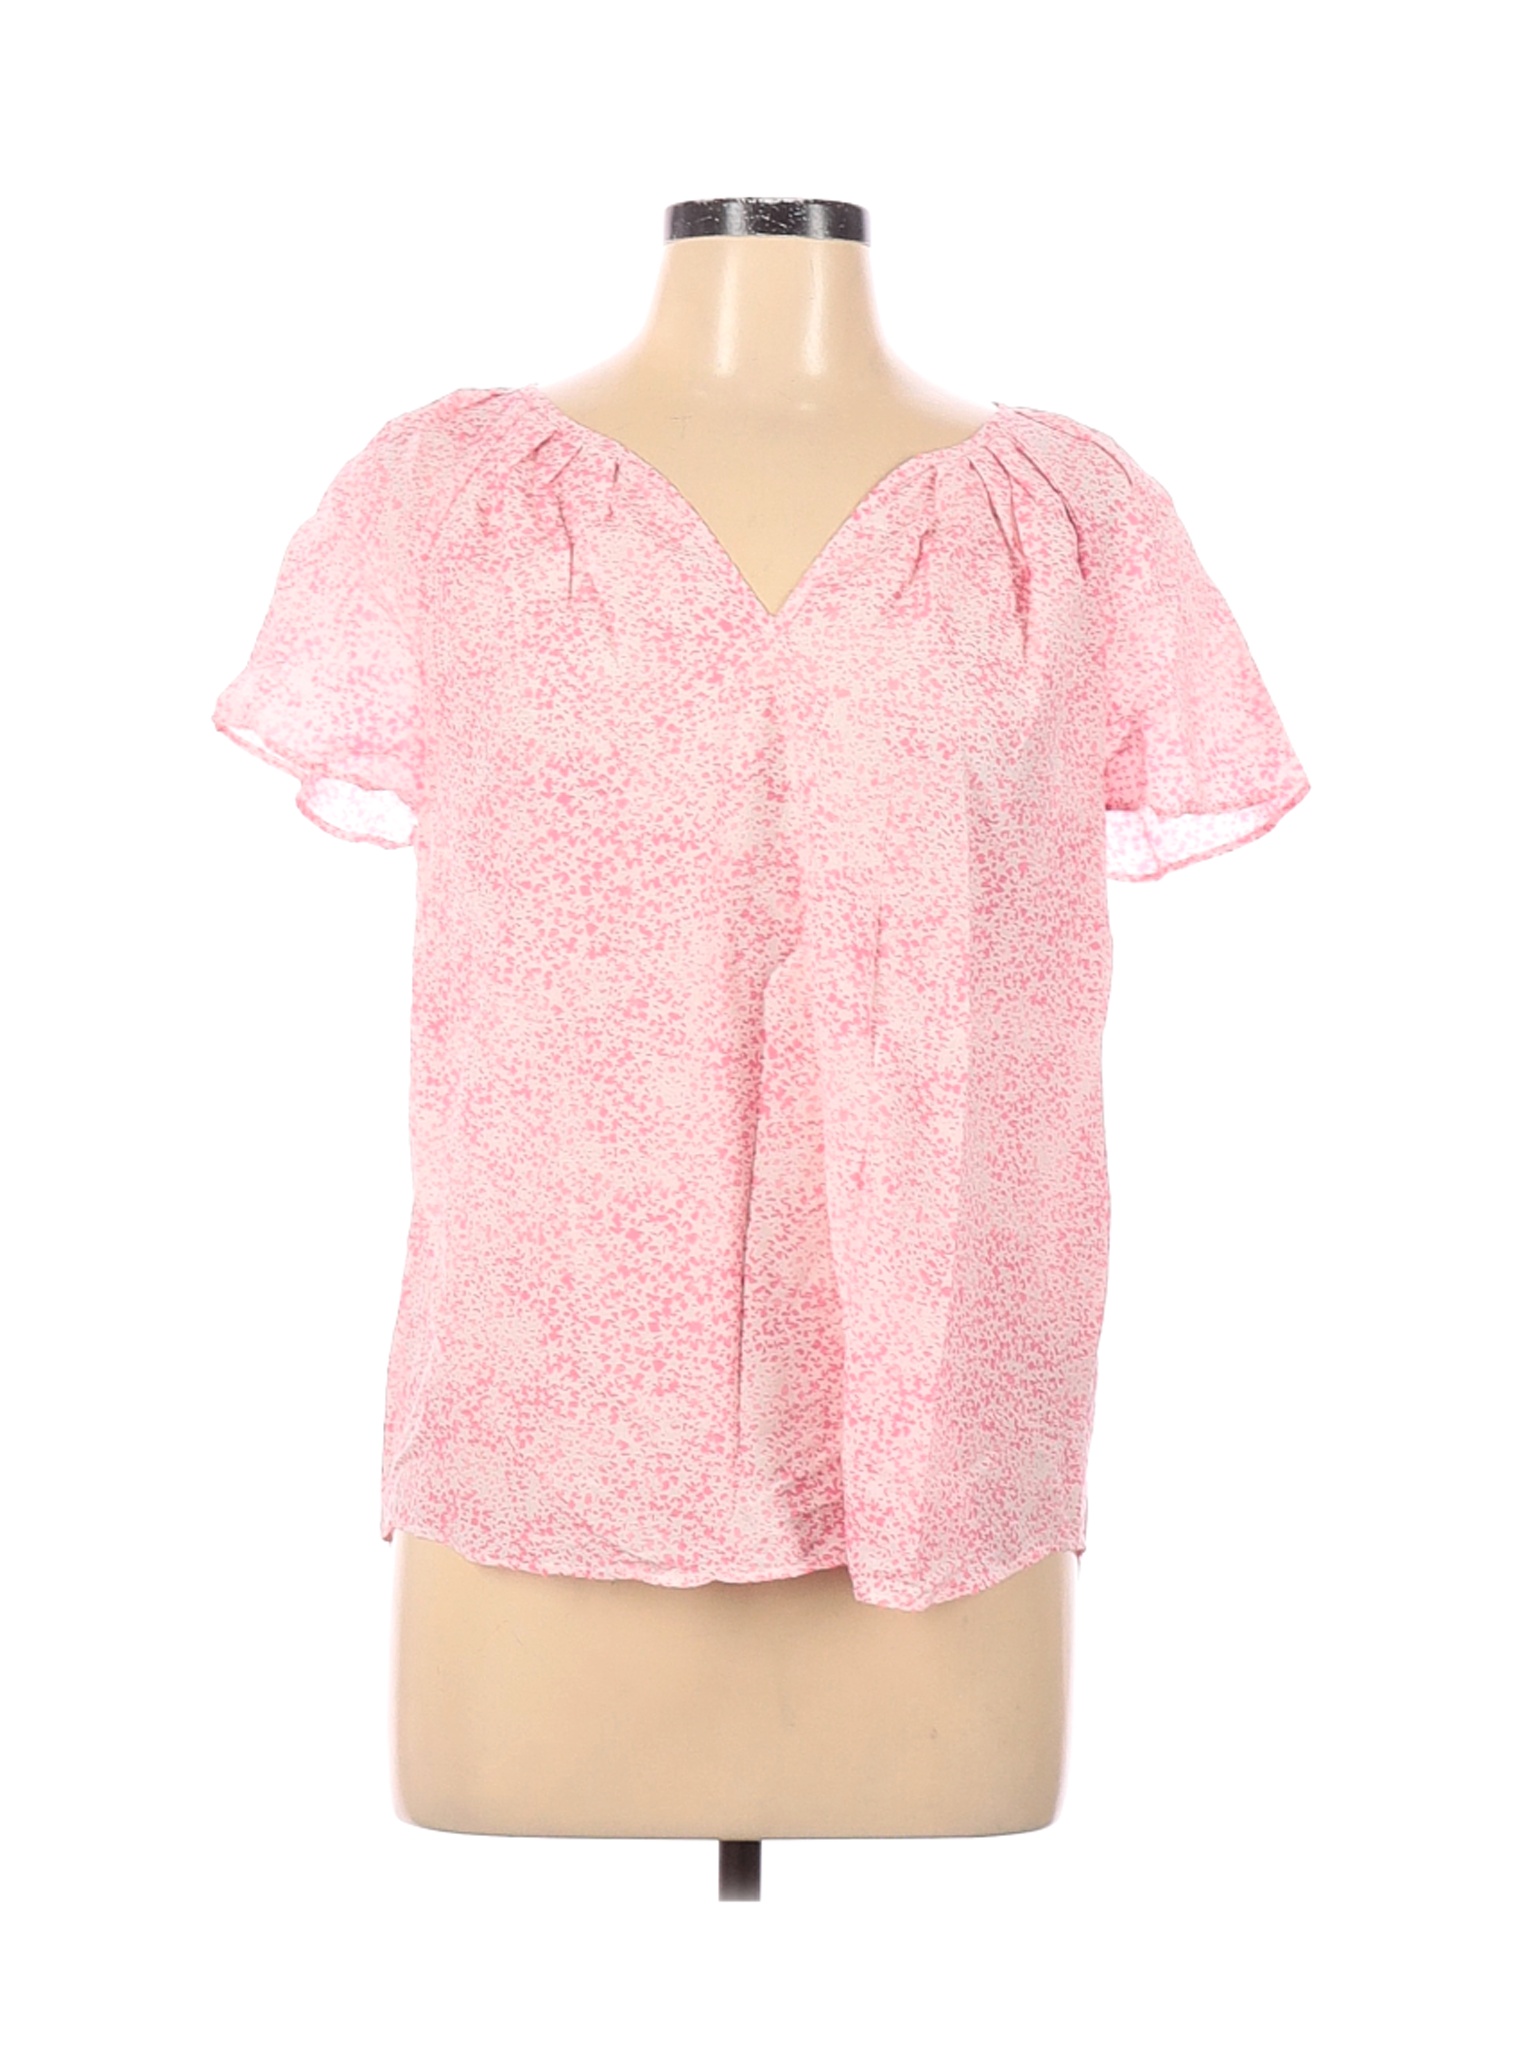 Gap Women Pink Short Sleeve Blouse L | eBay